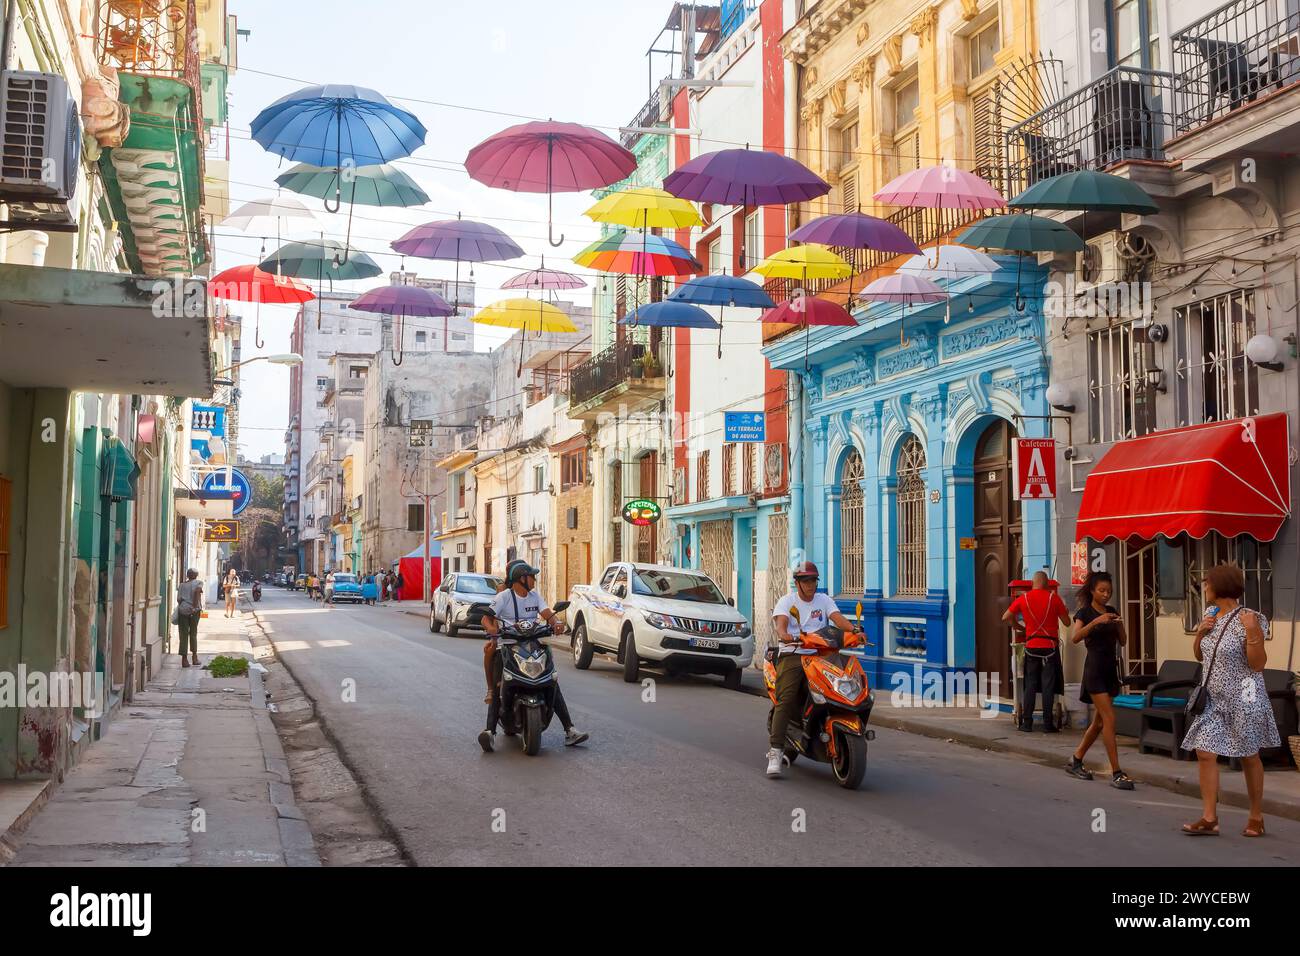 Cuban people driving e-bike by street decoration with umbrellas in Havana, Cuba Stock Photo